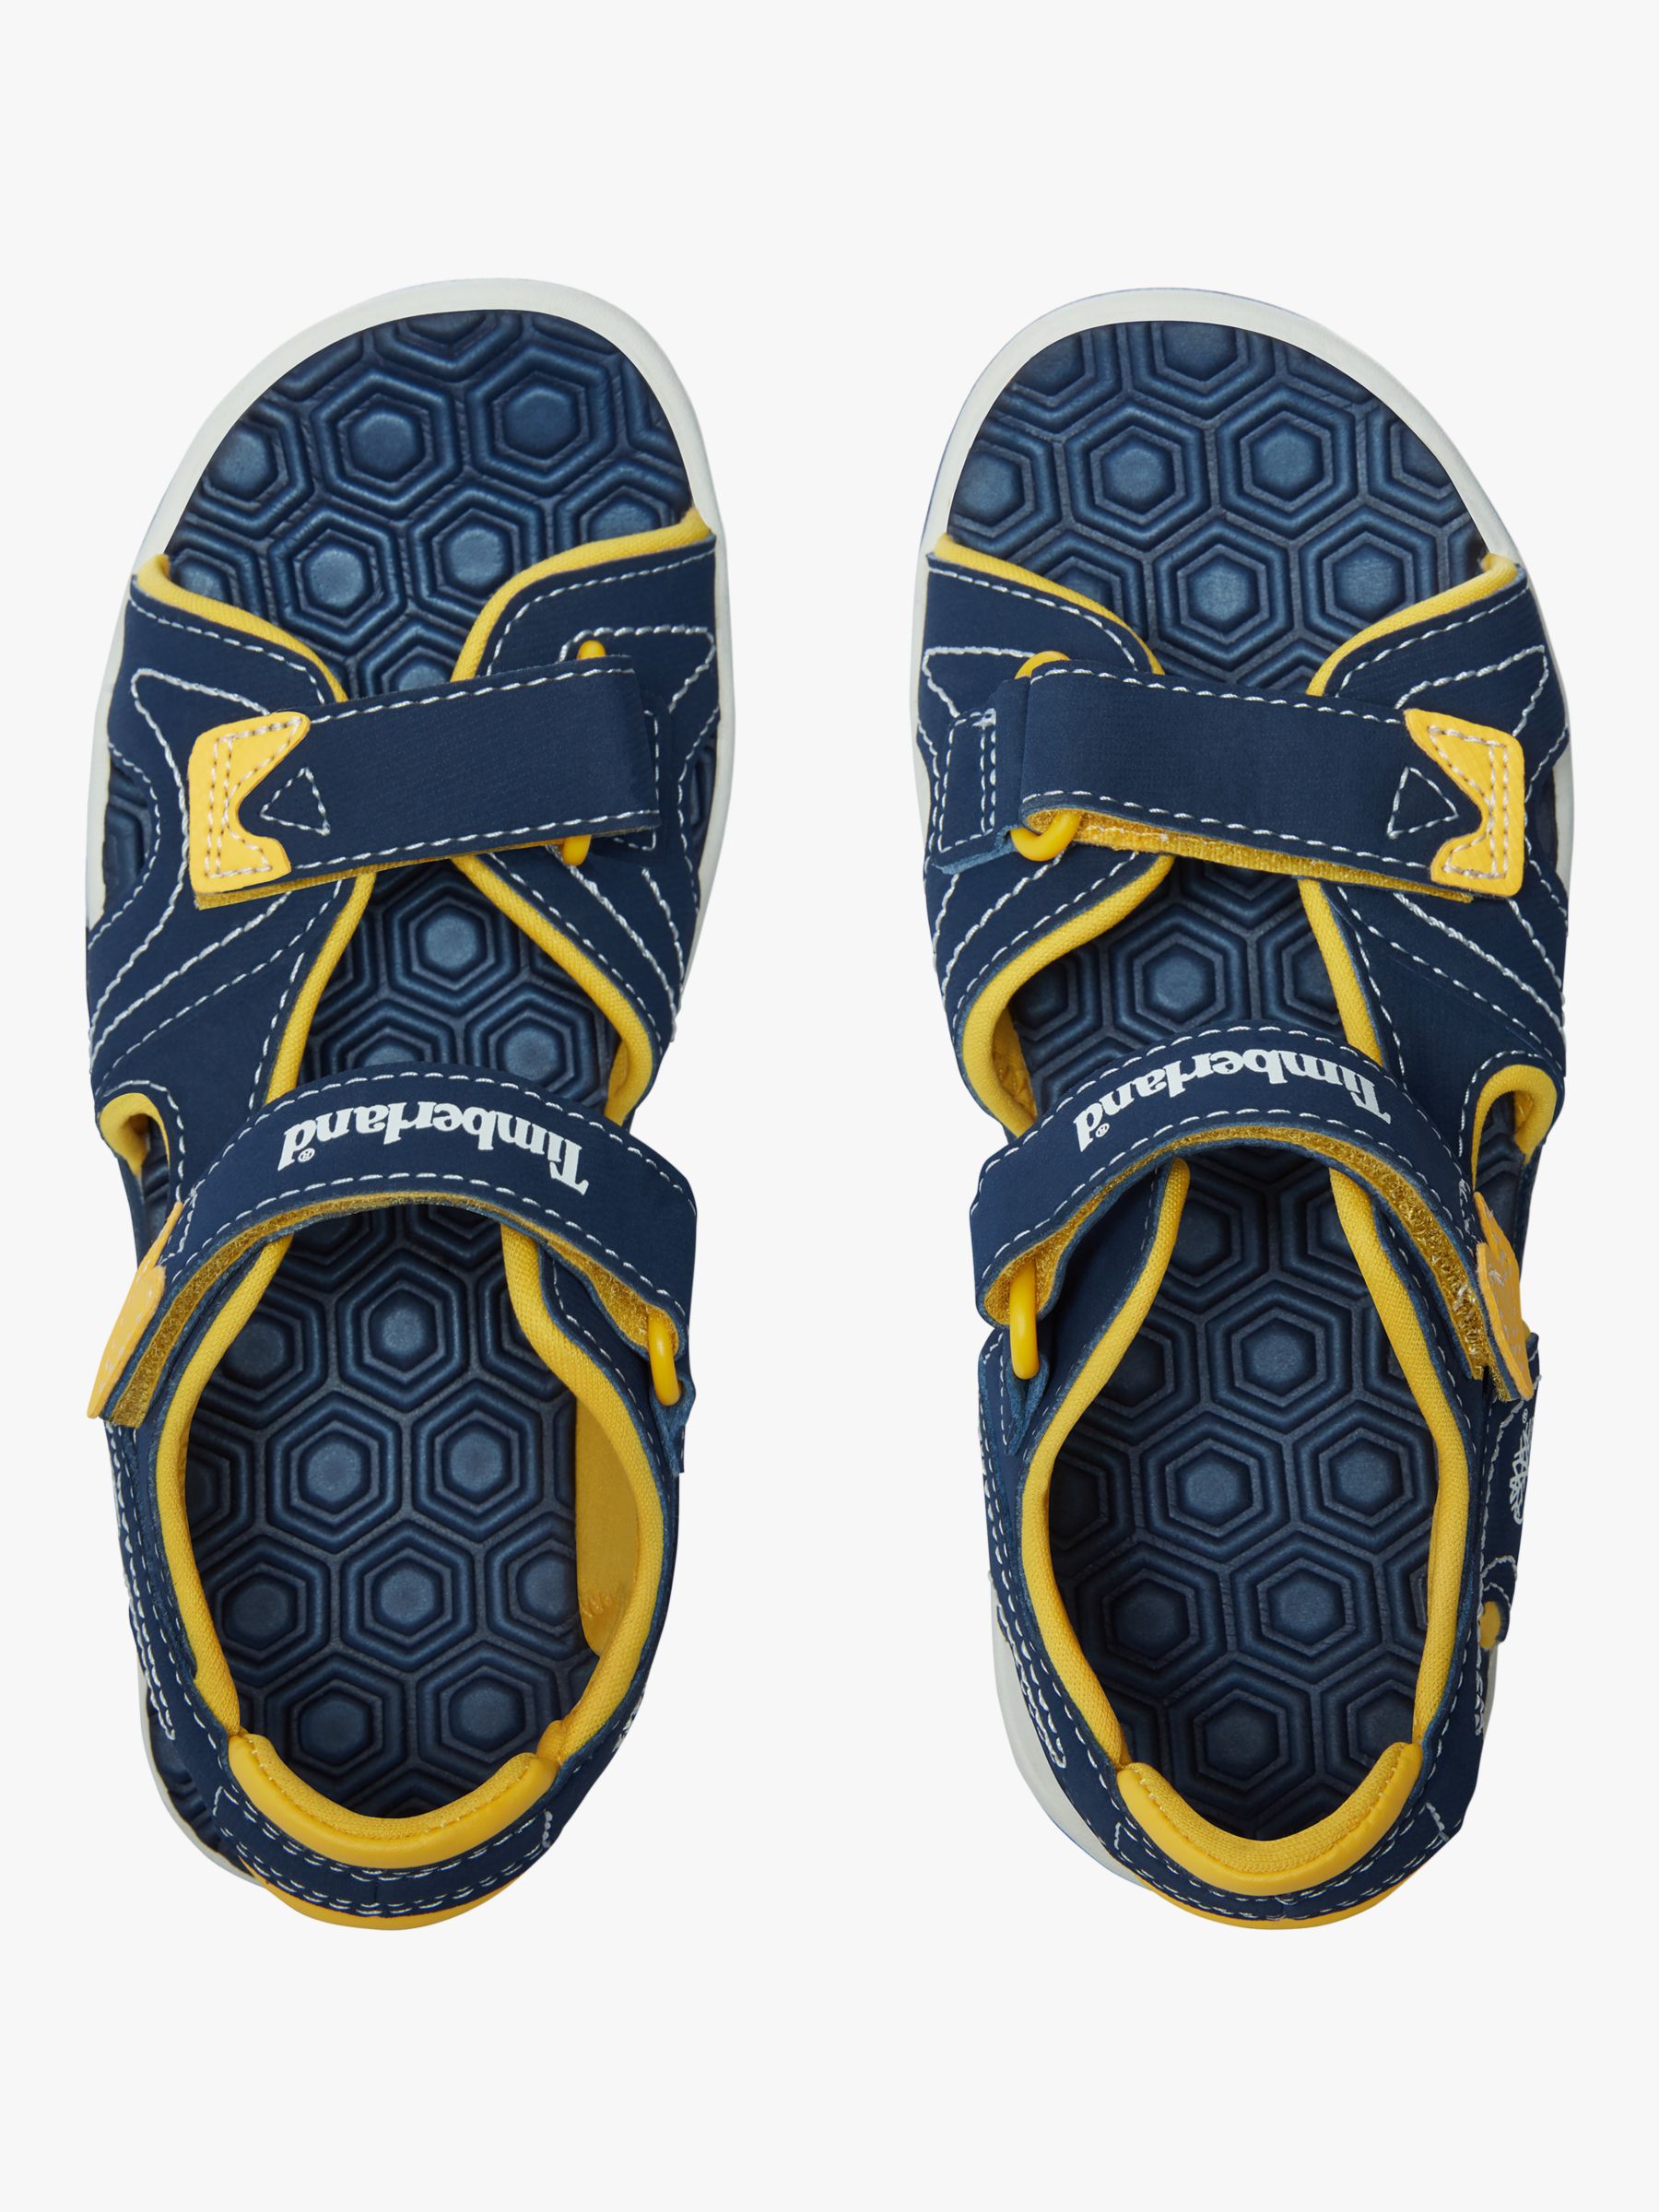 Timberland Kids' Adventure Seeker Riptape Sandals, Navy/ Yellow, 23